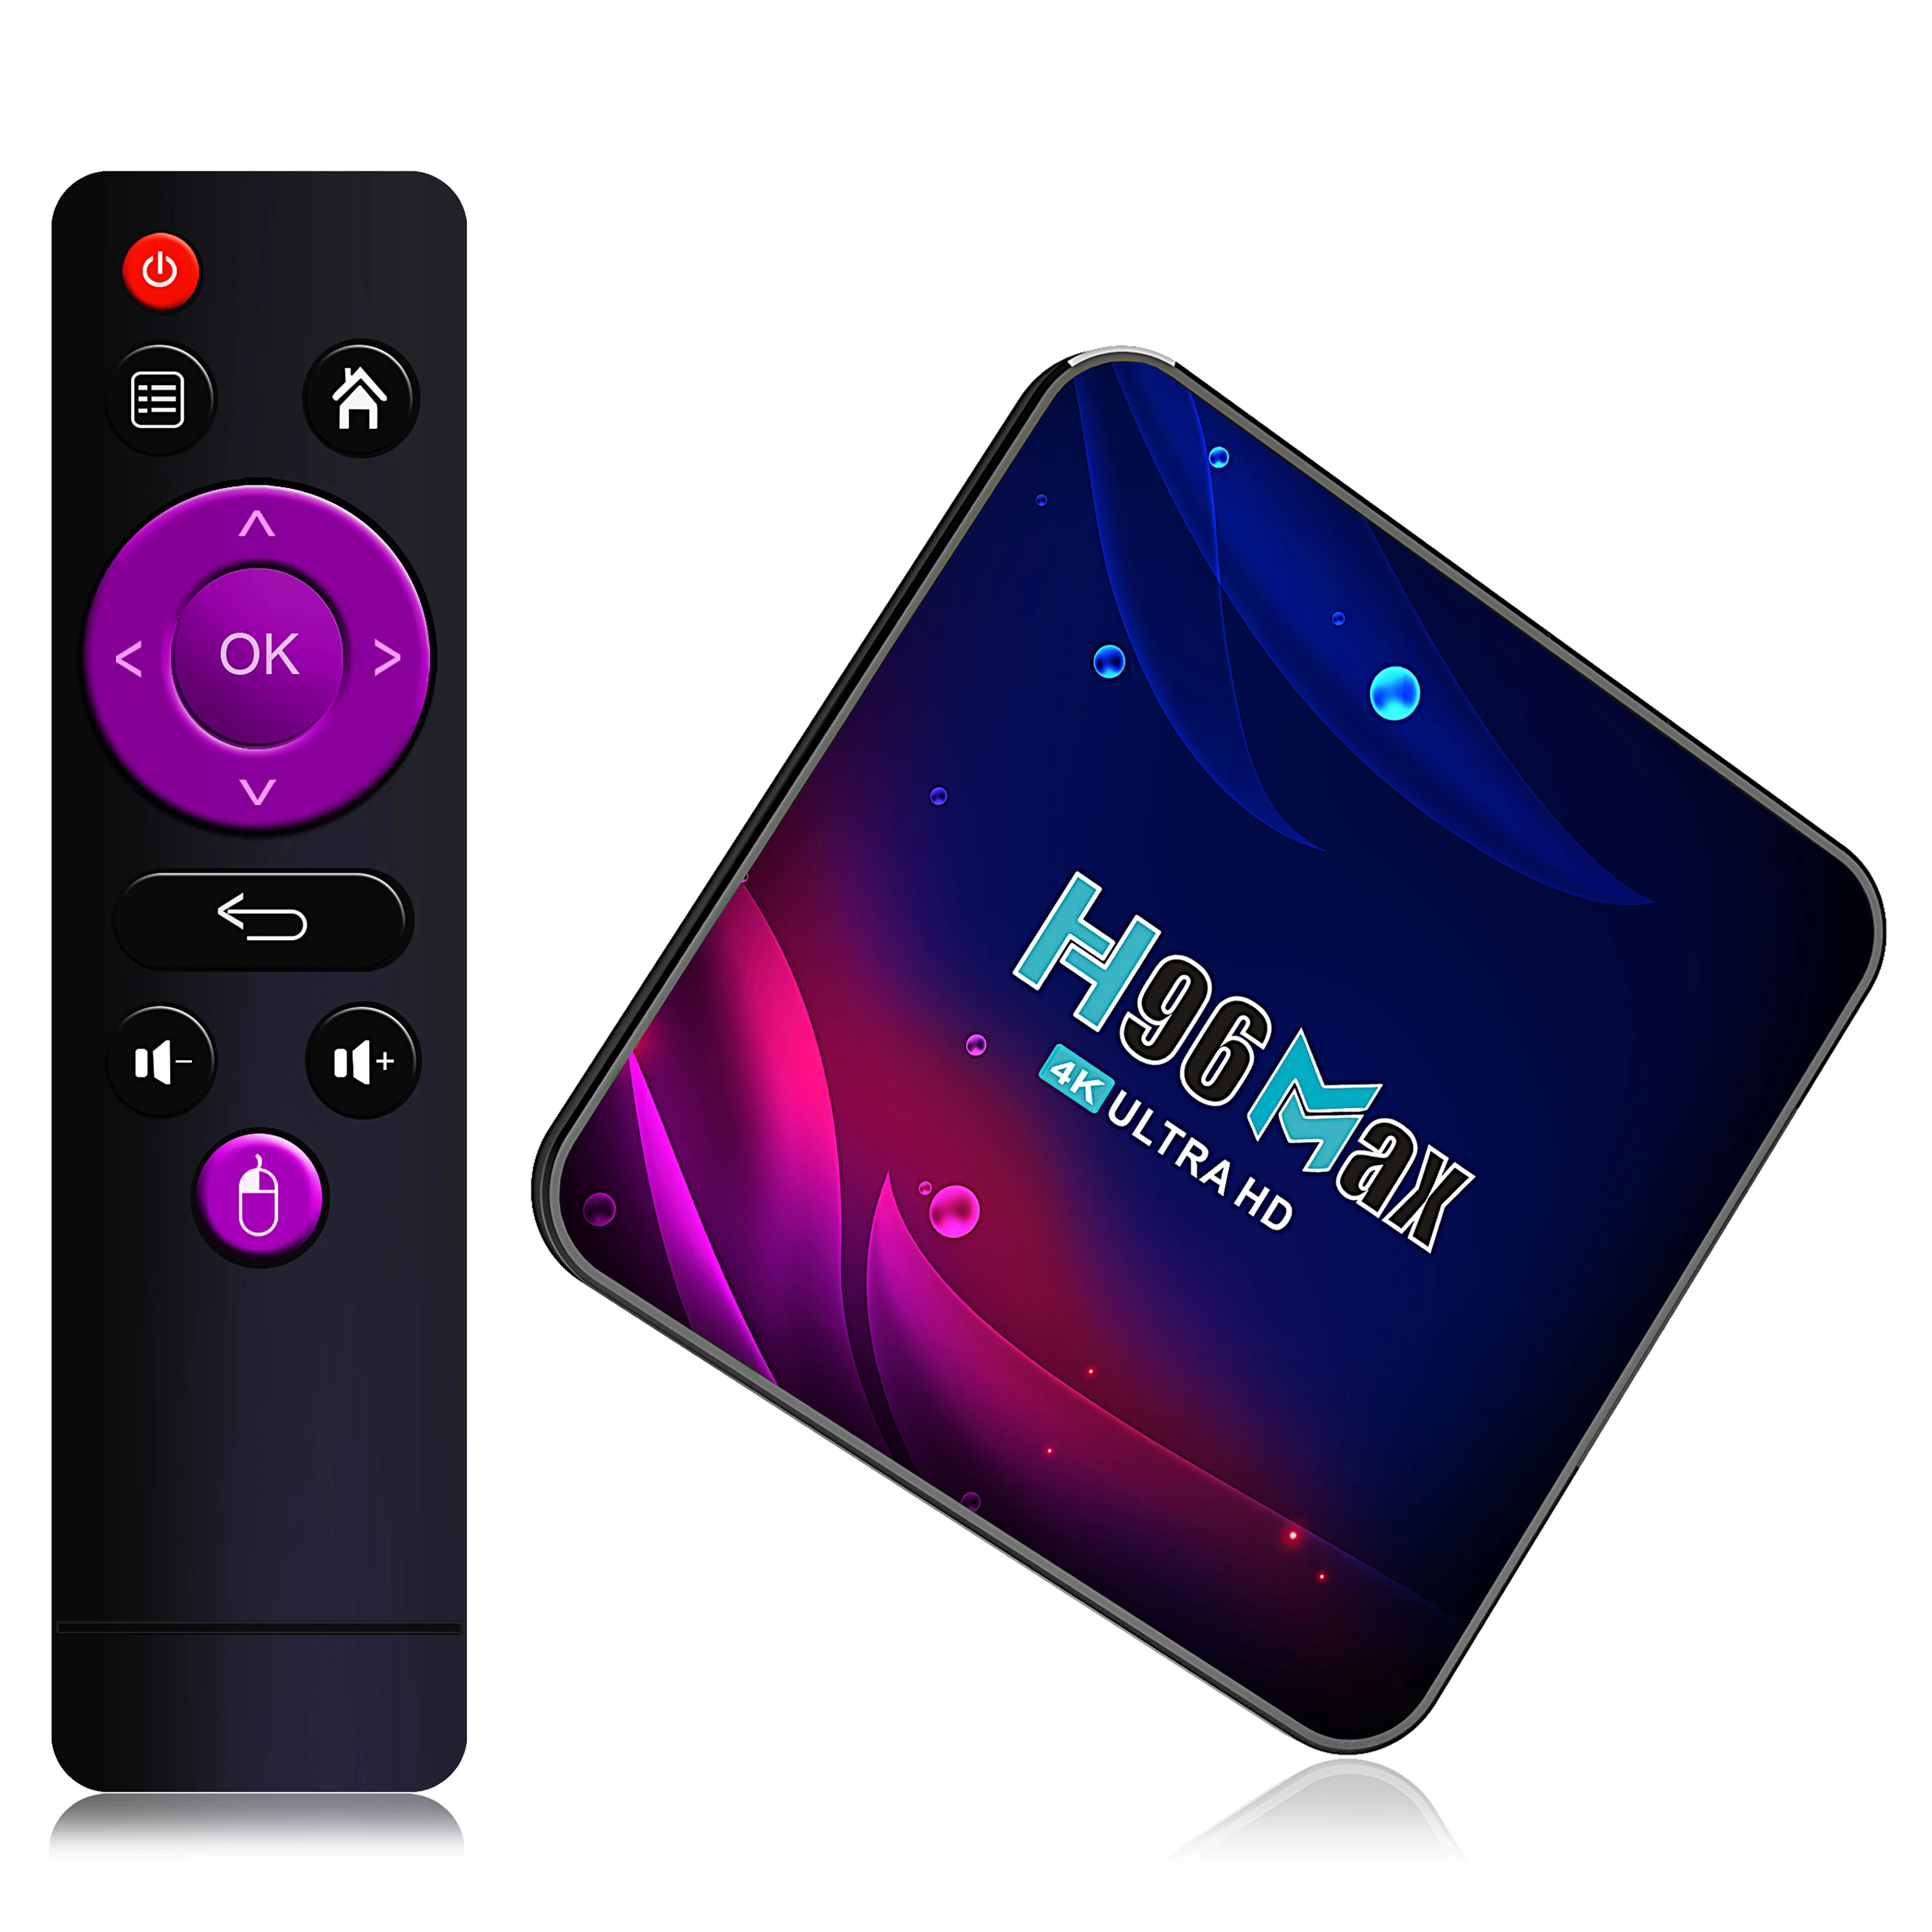 

2021 New Android 11 Smart TV Box H96 max v11 Quad-Core Set-top Box RK3318 4gb 32gb android-tv-box, Purple